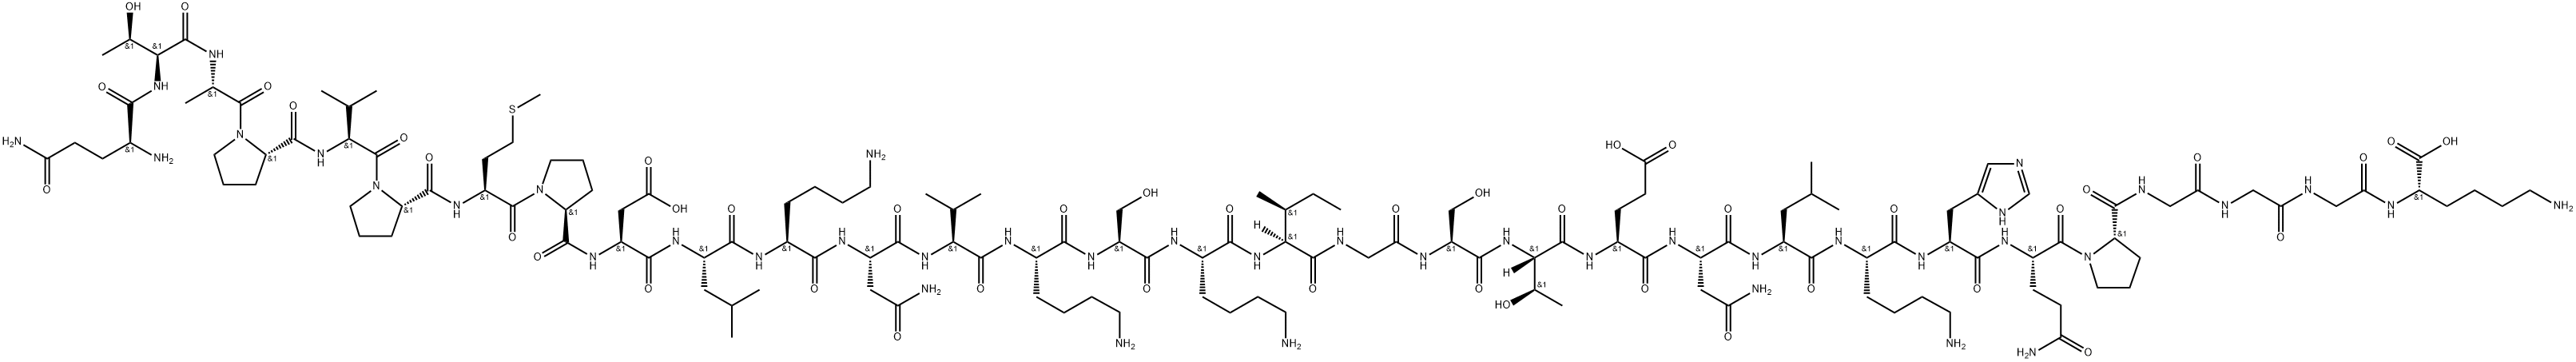 Tau Peptide (244-274) (Repeat 1 Domain) Structure